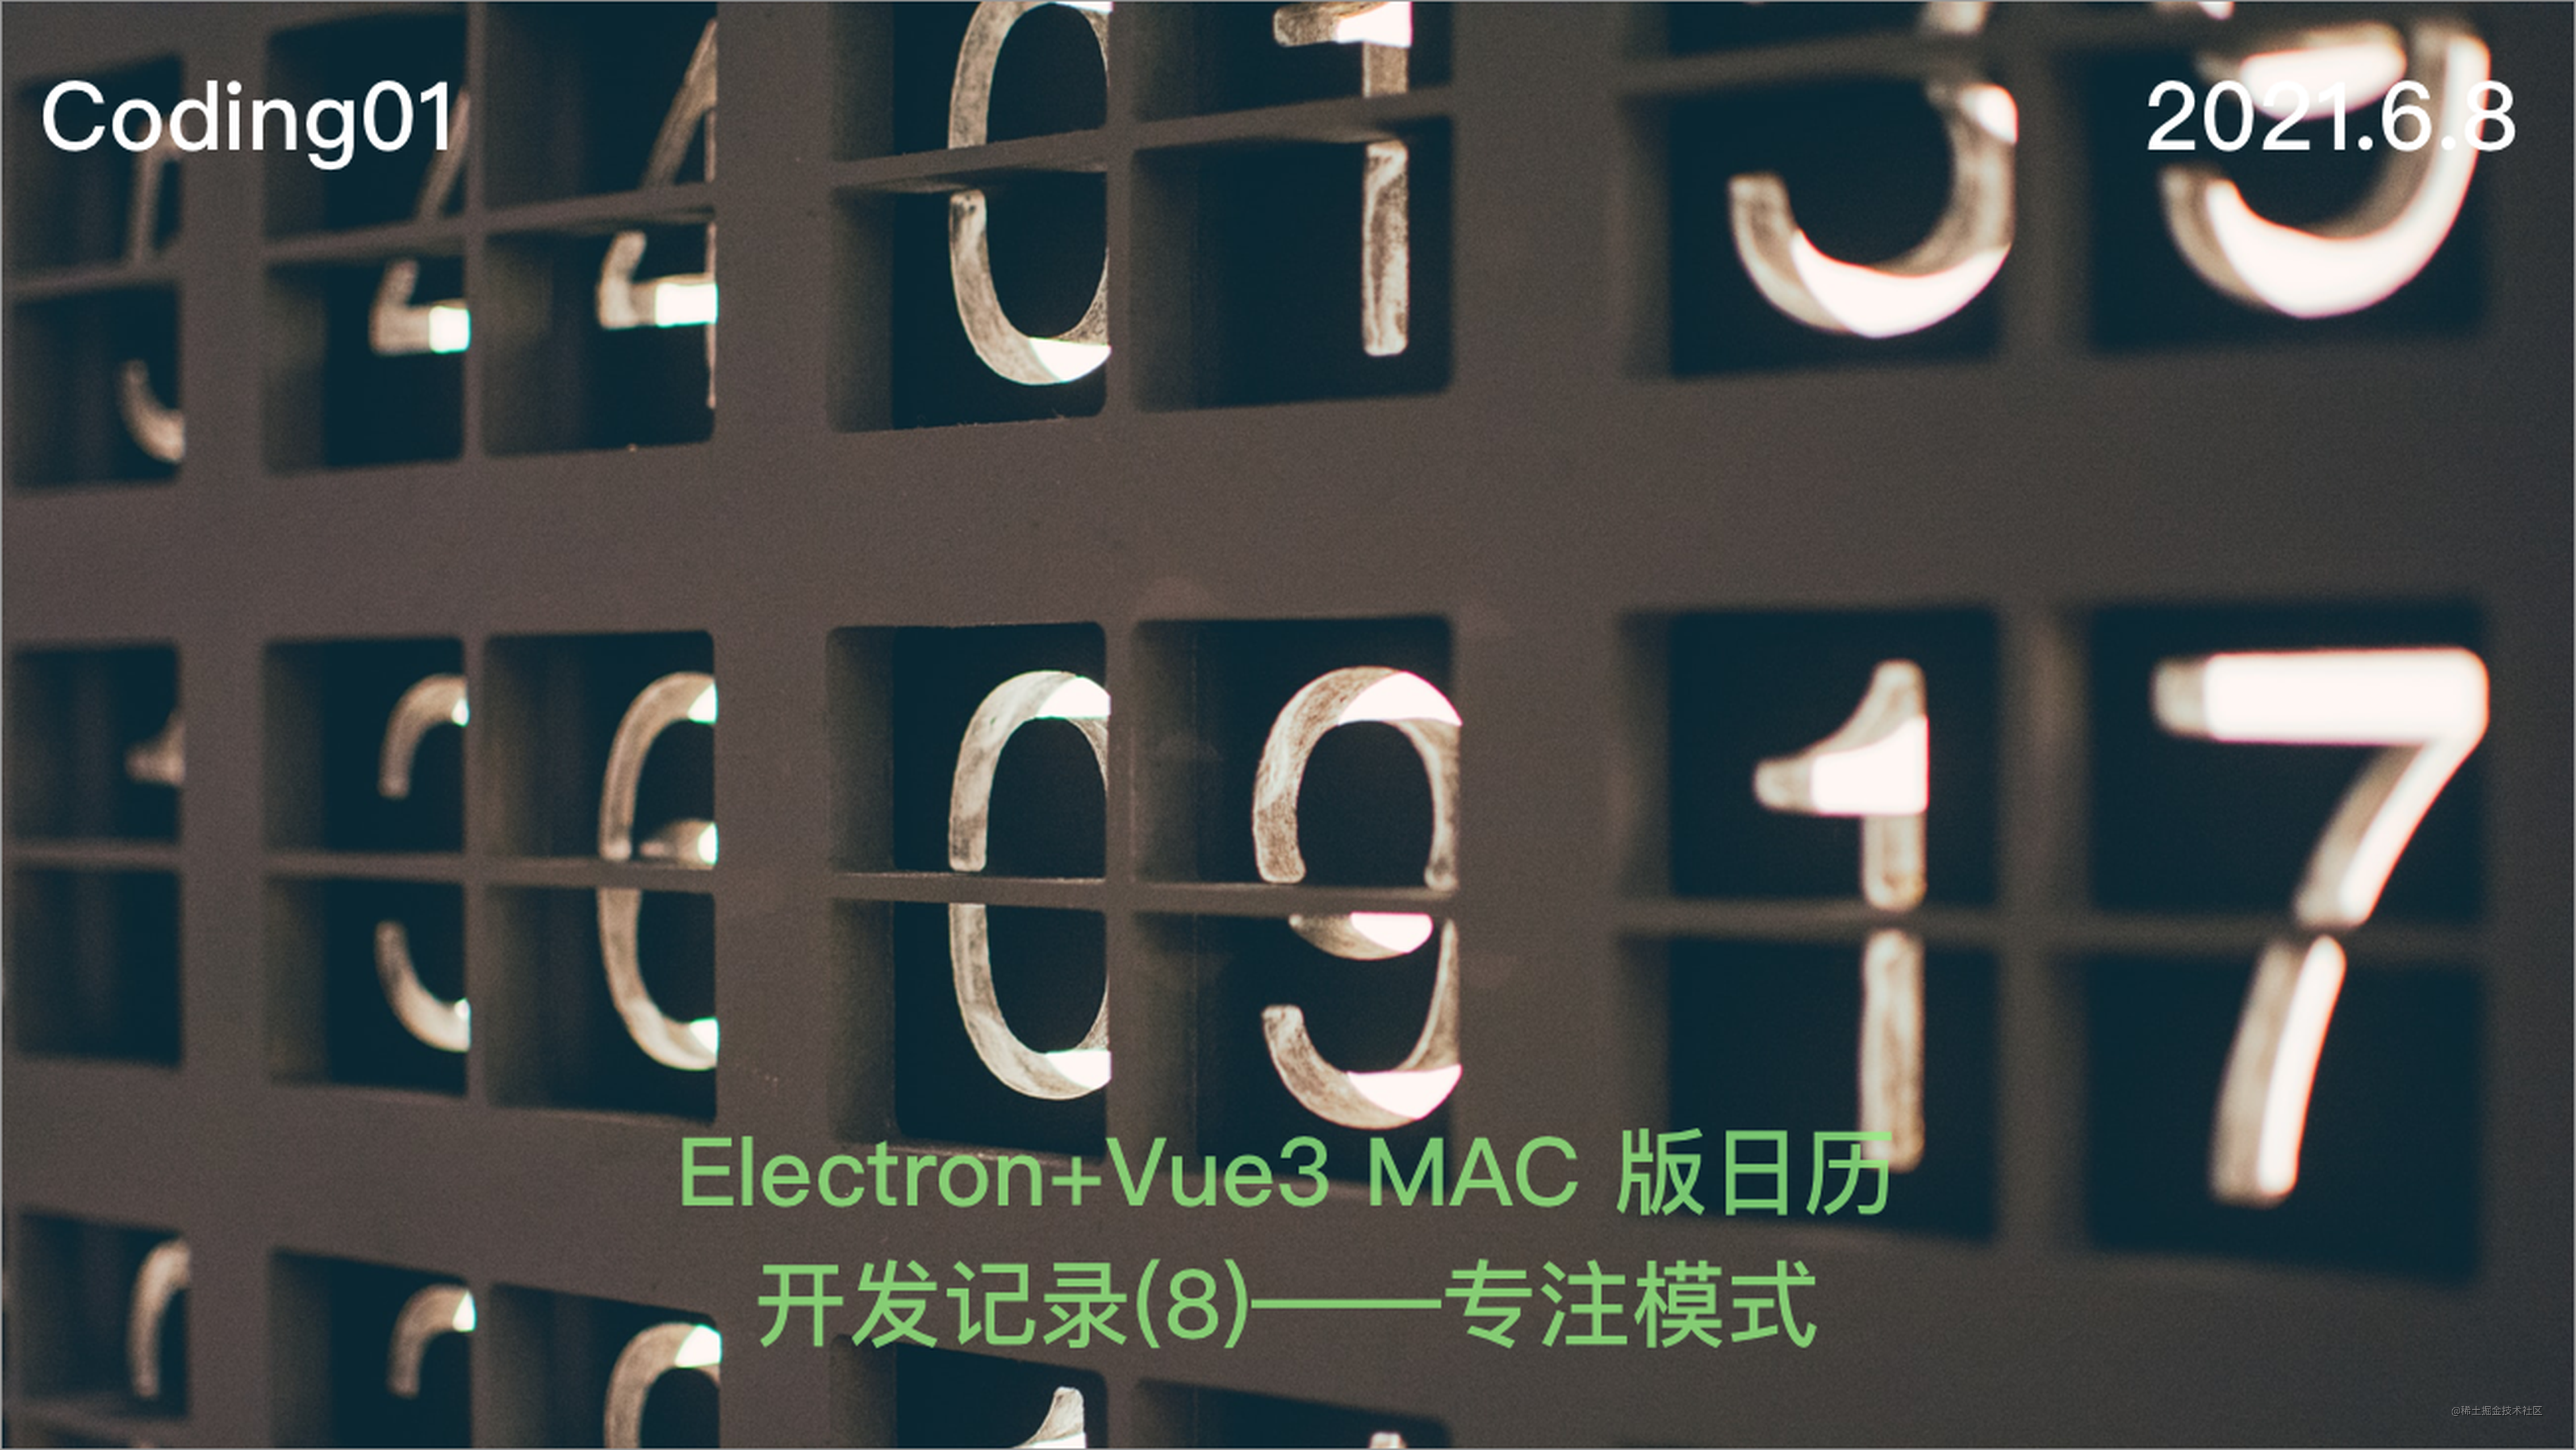 Electron+Vue3 MAC 版日历开发记录(8)——专注模式